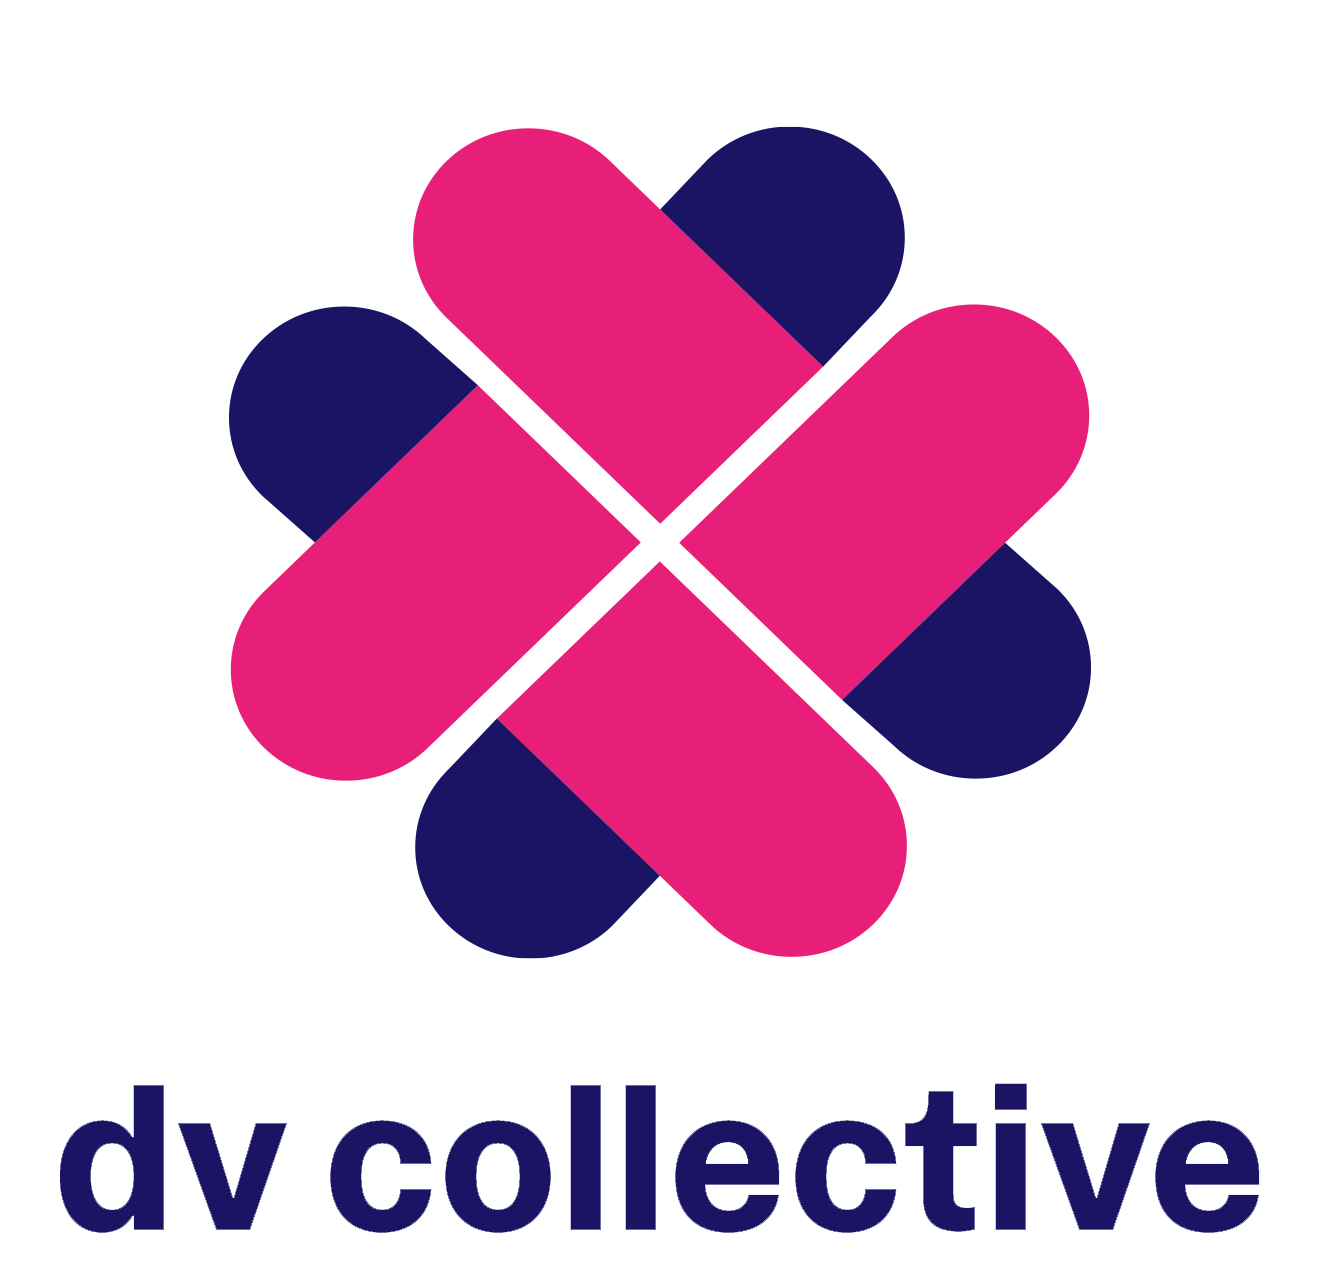 The DV Collective